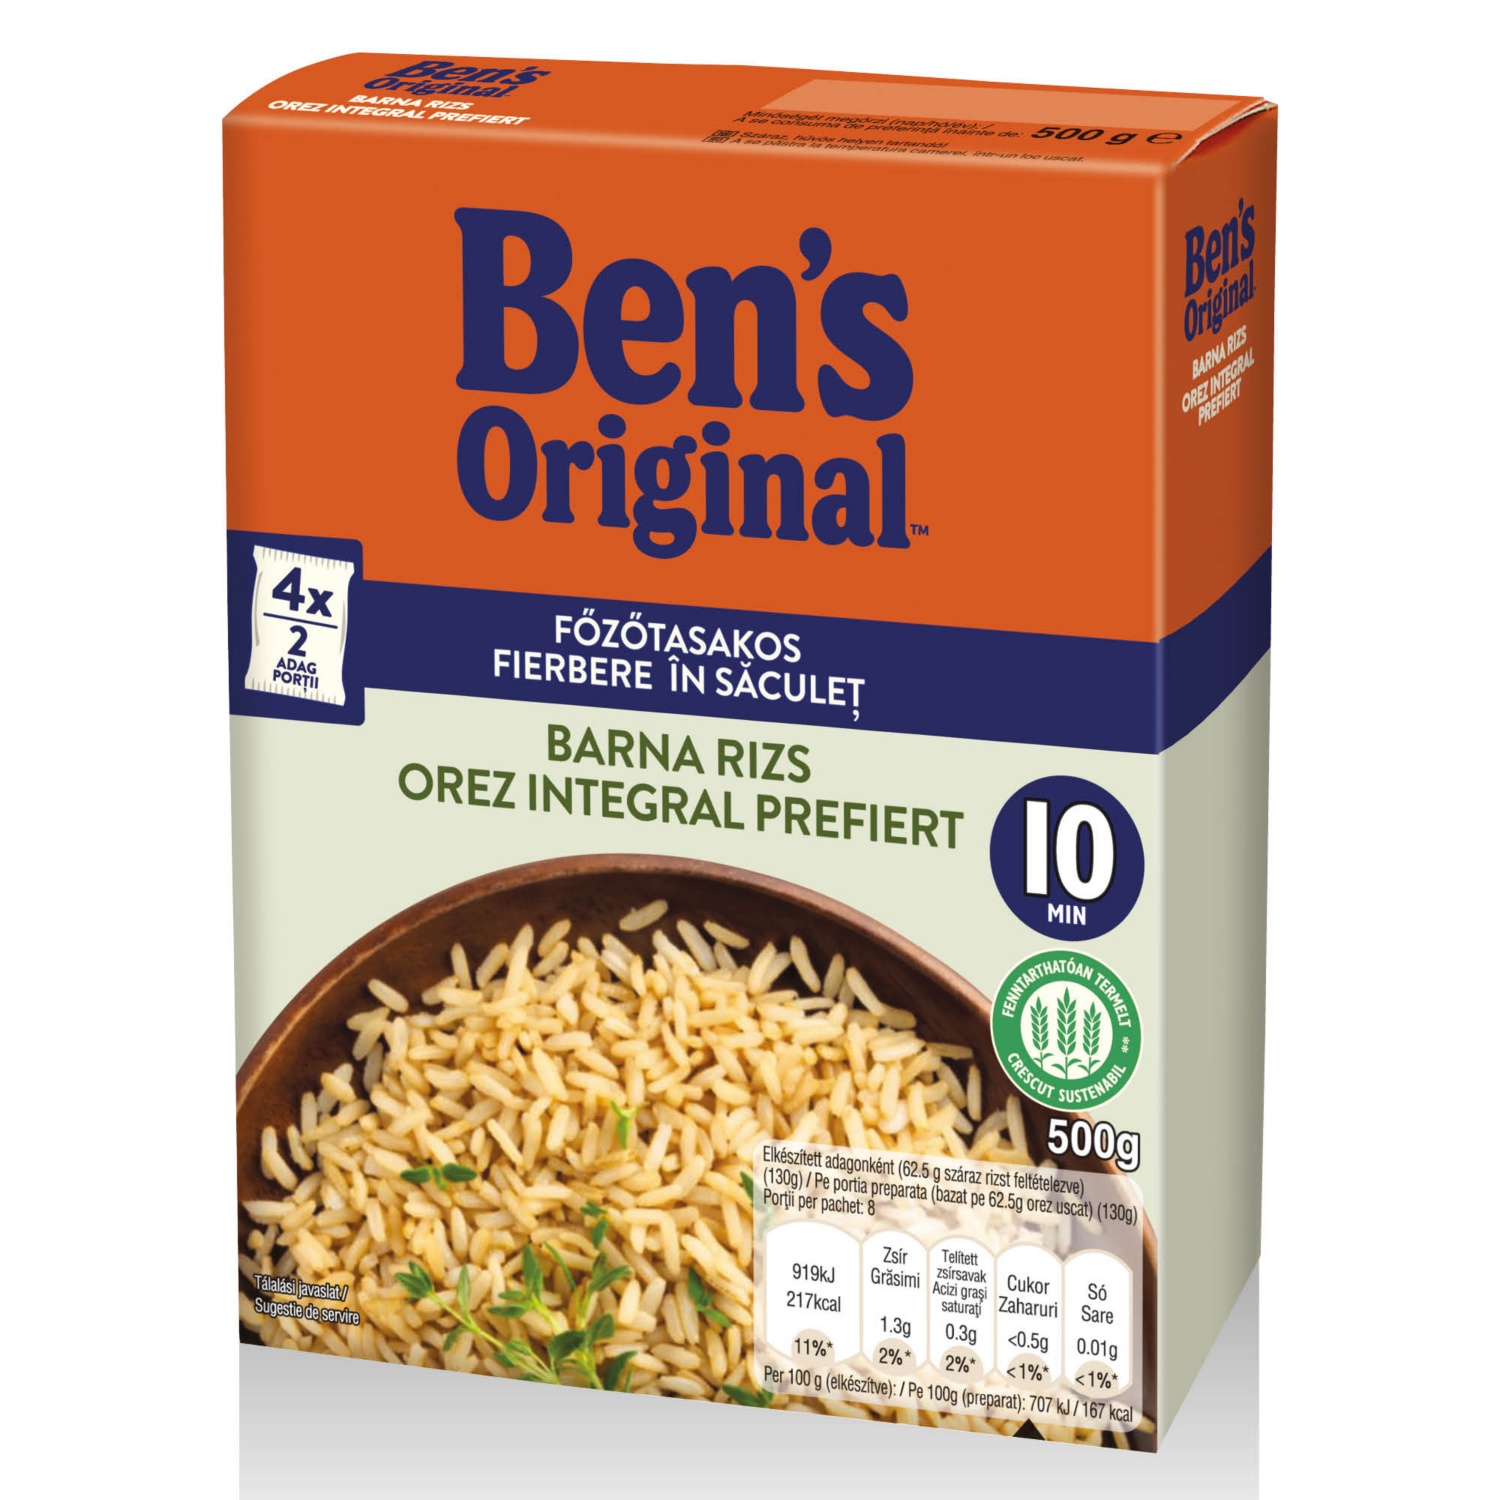 BEN'S ORIGINAL Rizs főzőtasakban, 4 tasak, Barna rizs